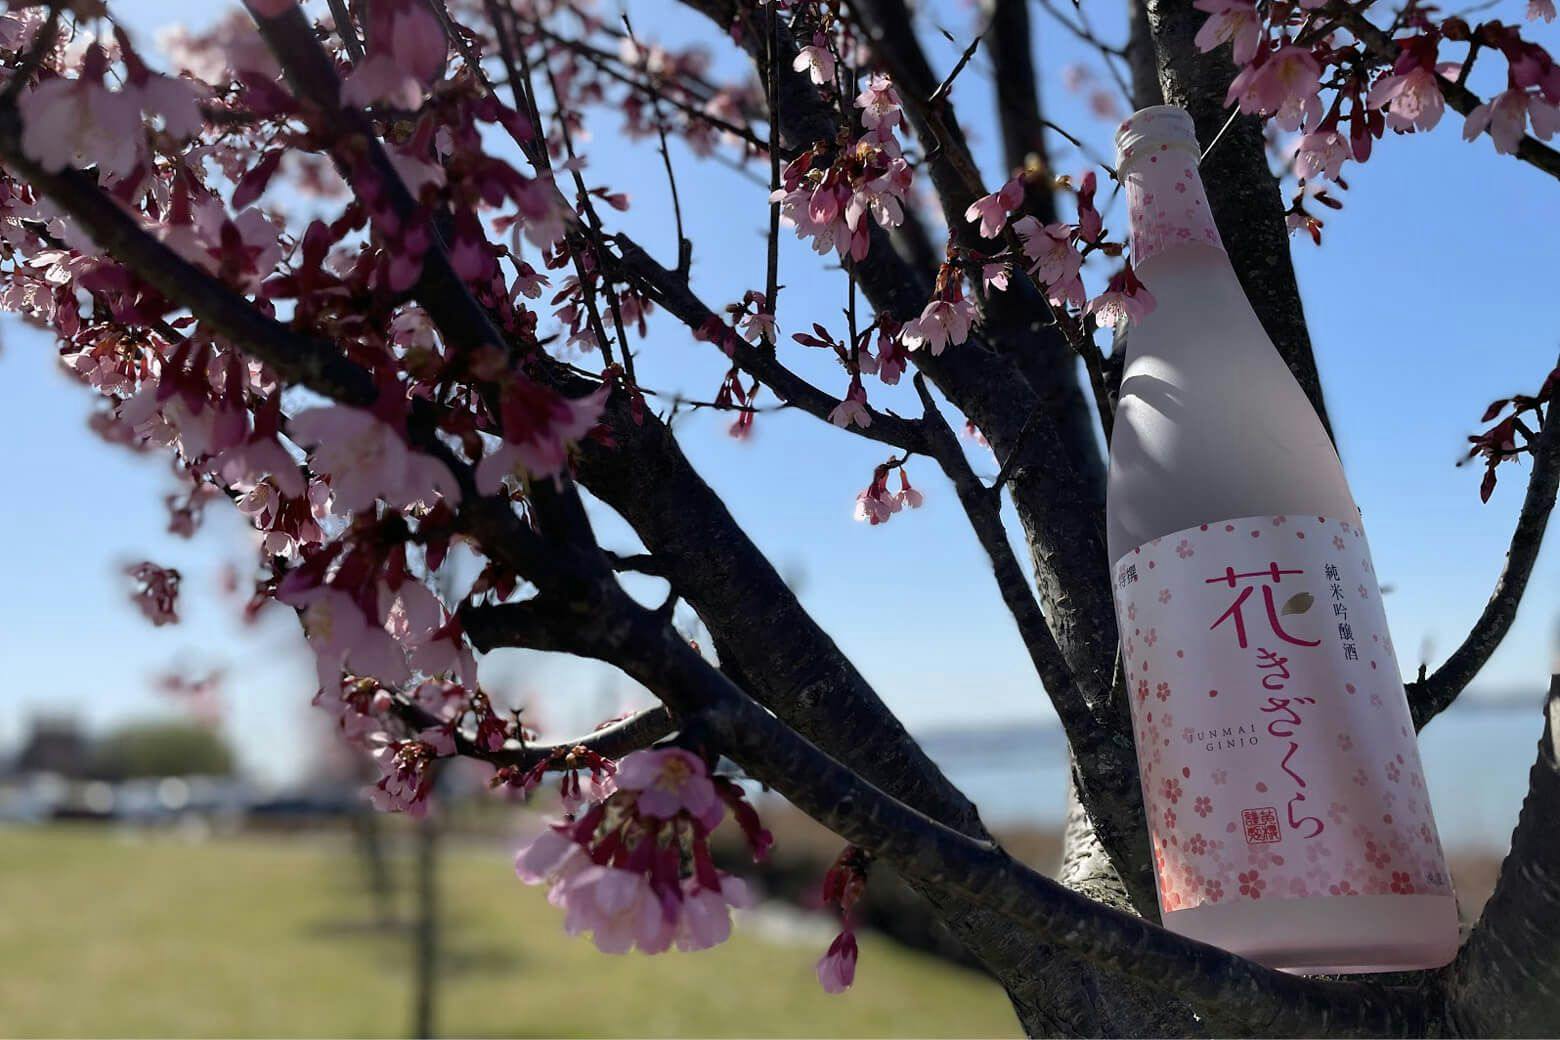 Kizakura “Hana Kizakura” sake bottle with cherry blossoms